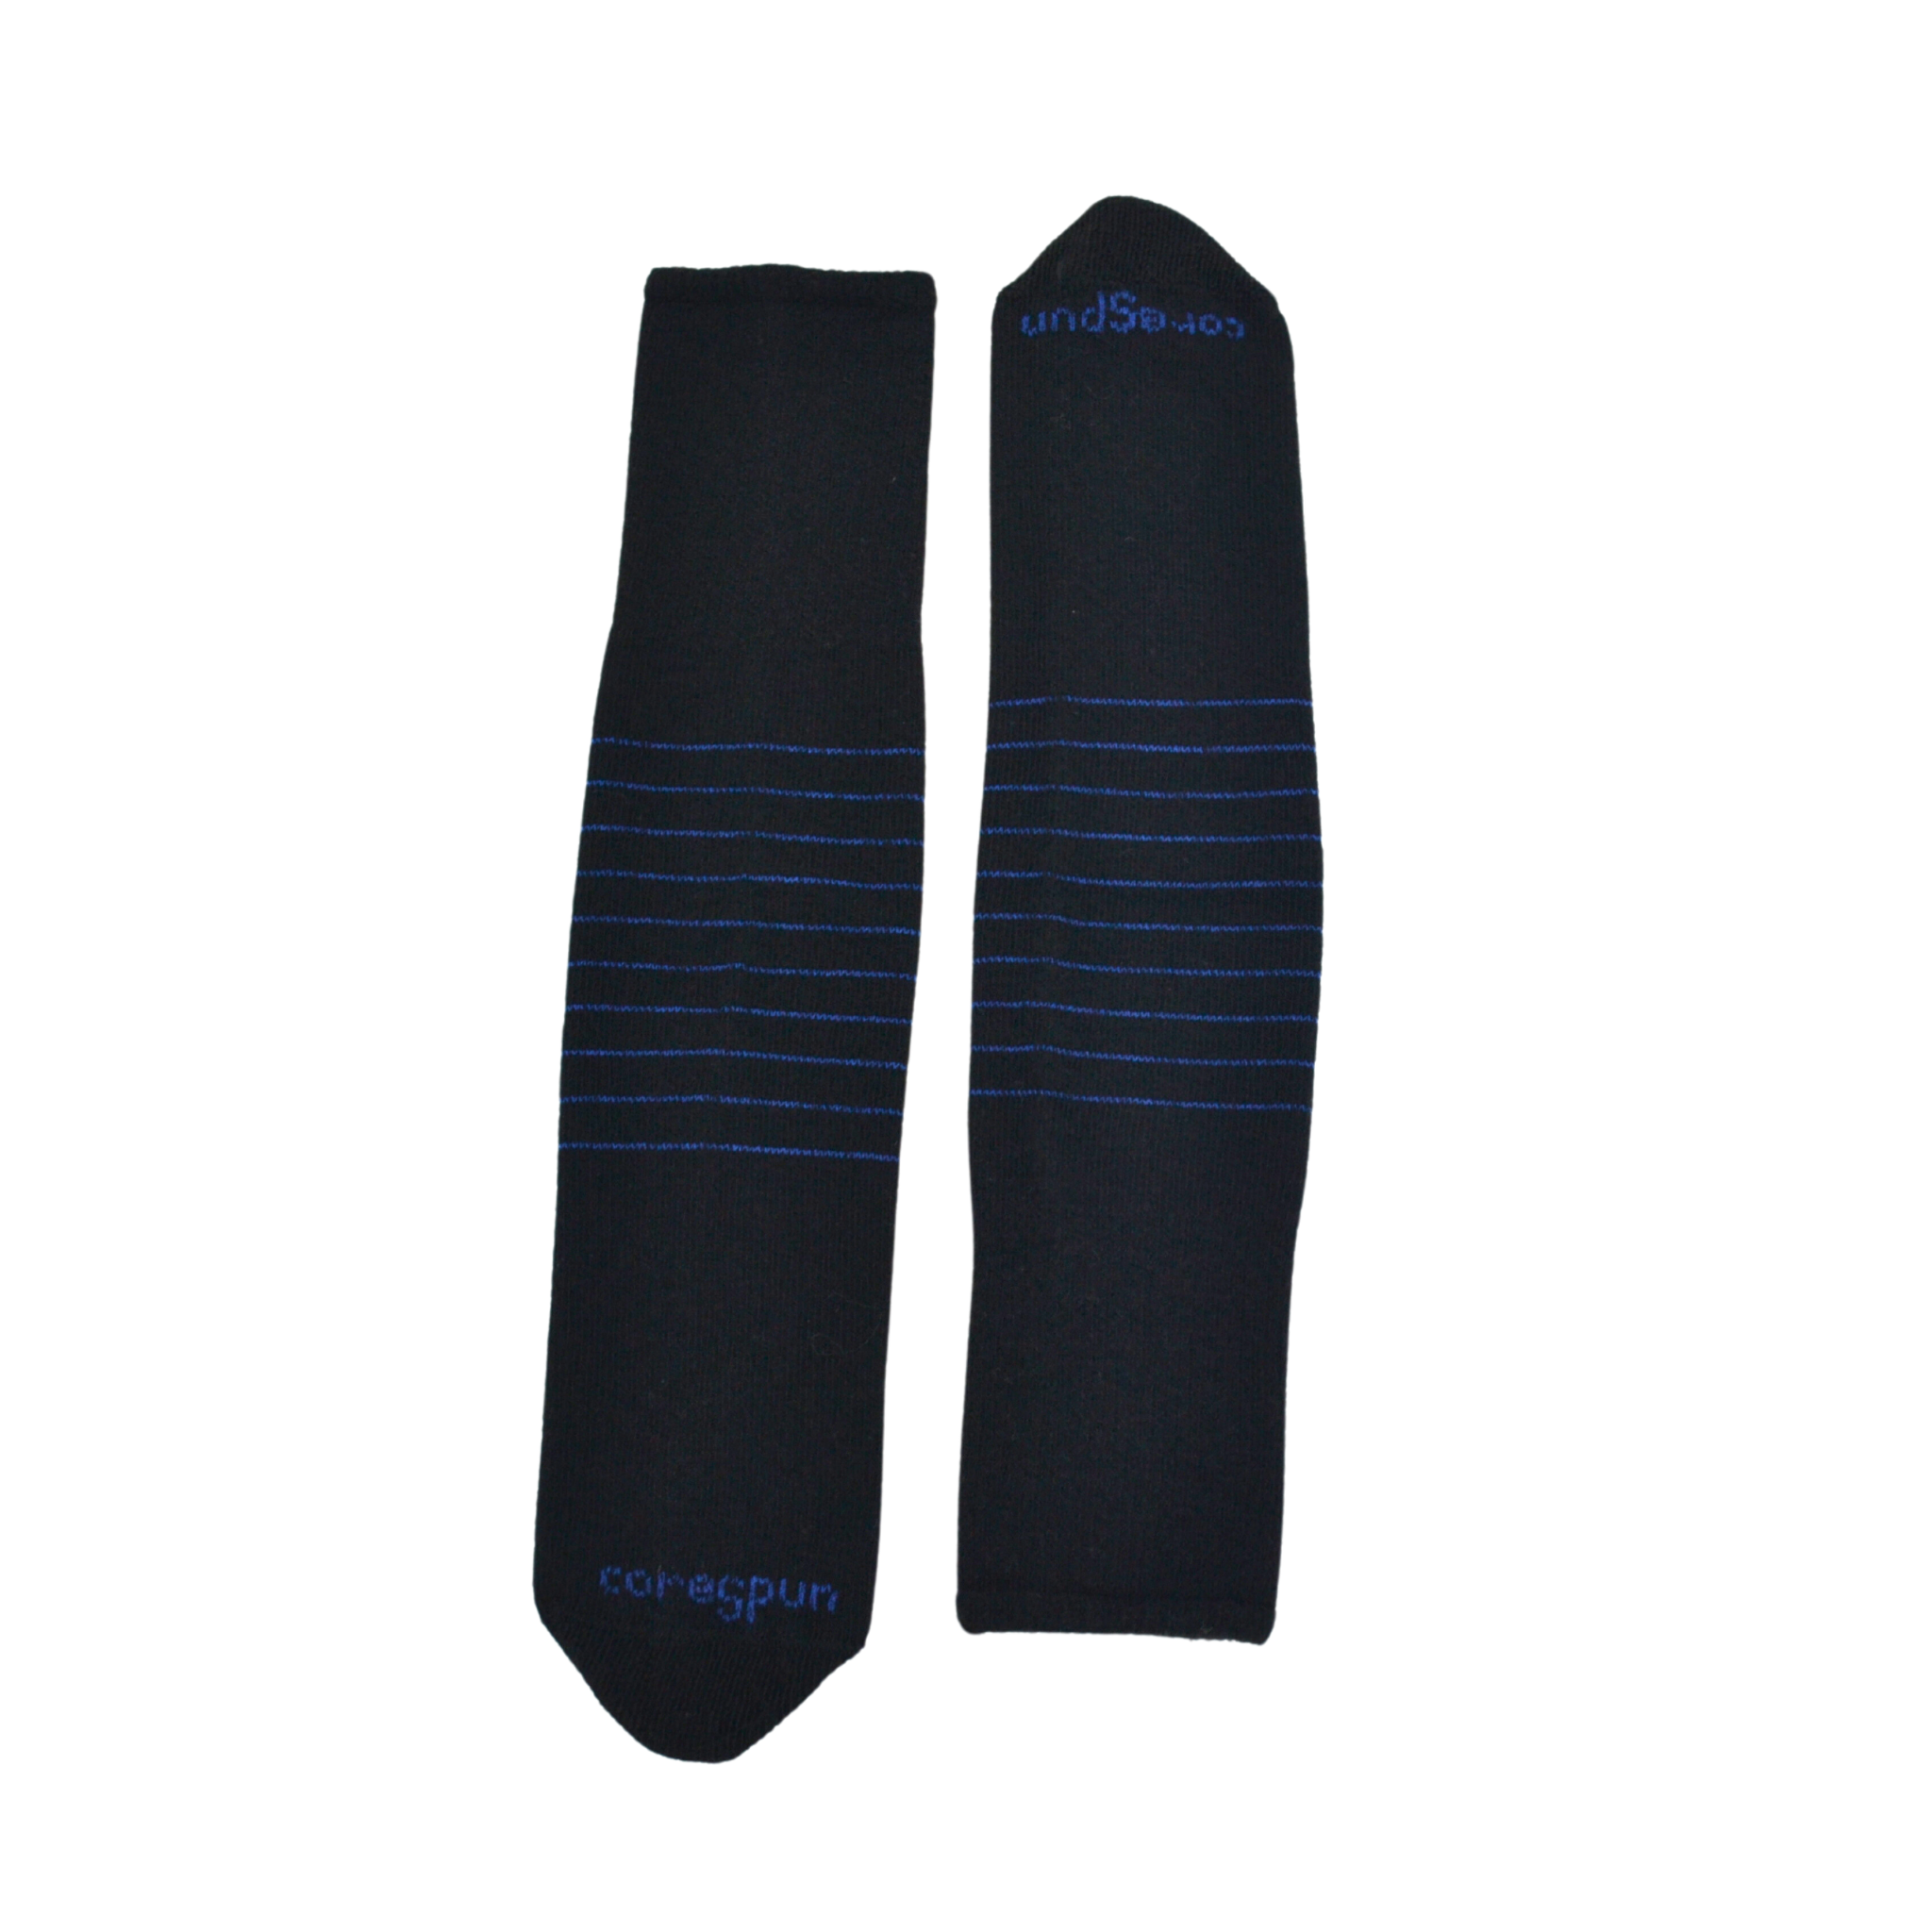 Knitrite - Patterned AFO Socks for Kids - Core Spun - 3 pair pack